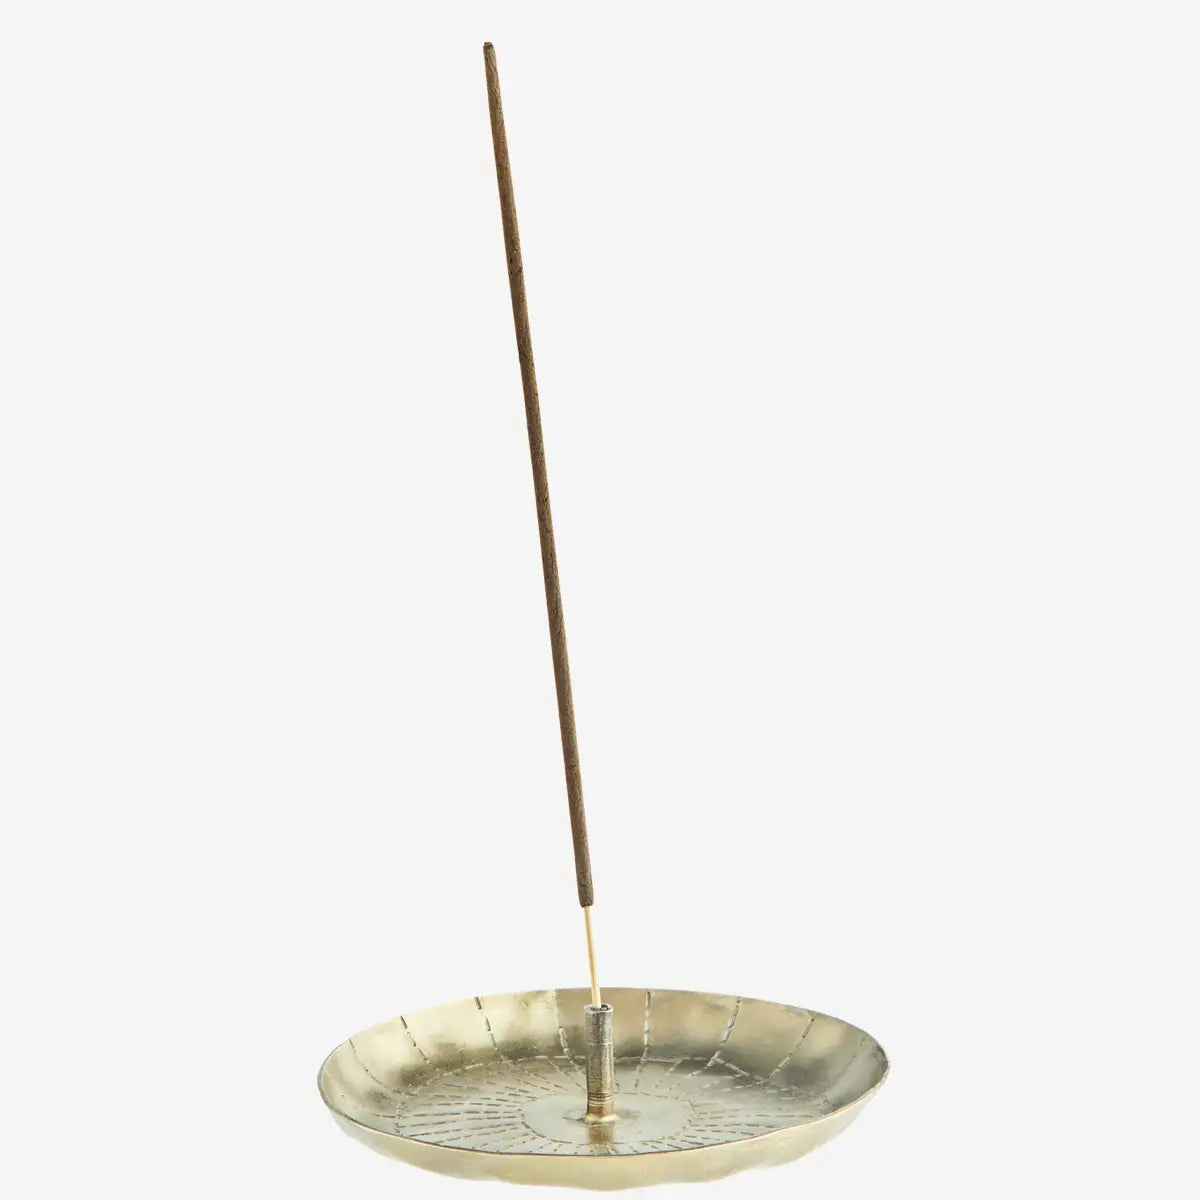 Iron incense holder